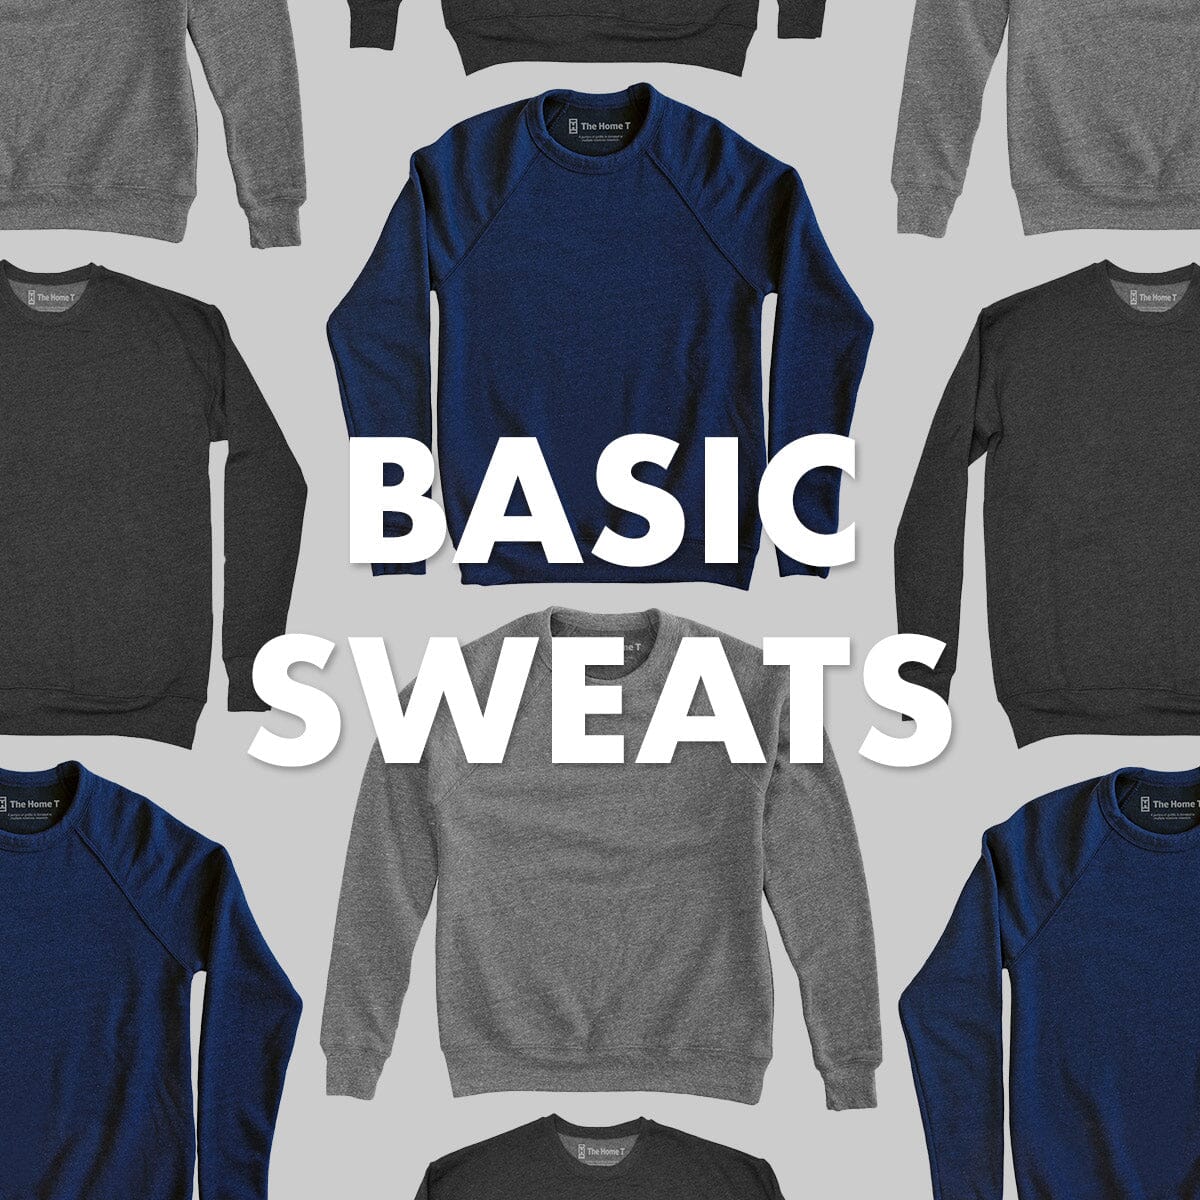 Basic Sweatshirts